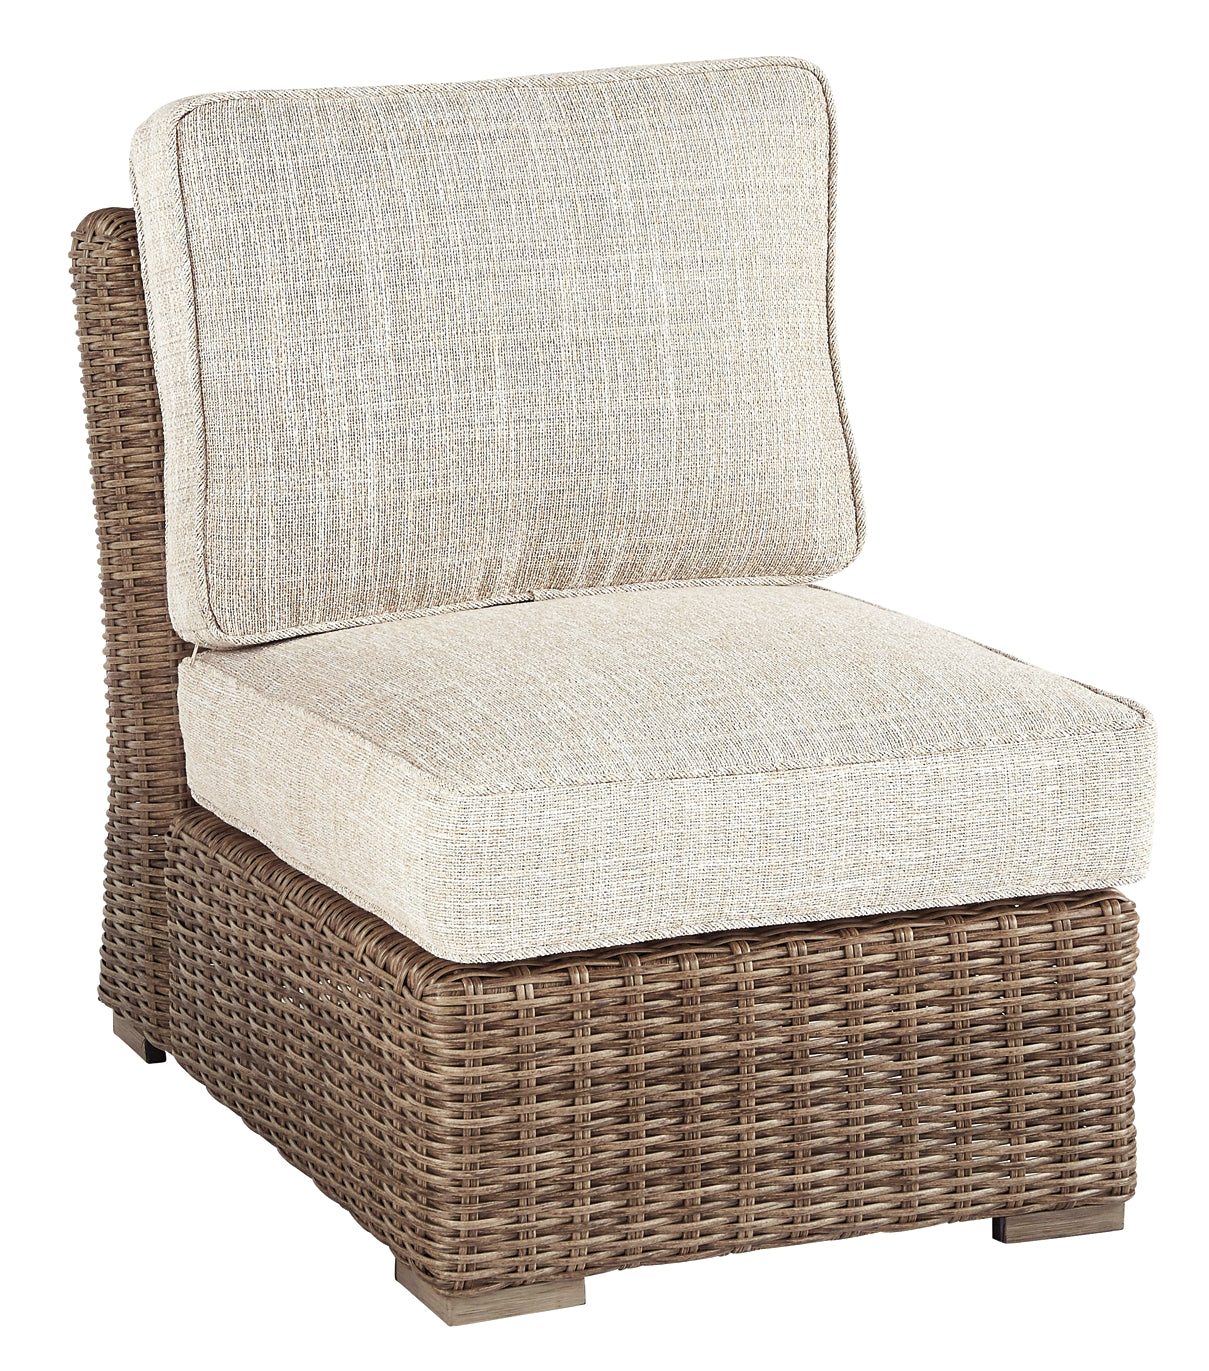 Beachcroft 5-Piece Outdoor Seating Set JB's Furniture Furniture, Bedroom, Accessories